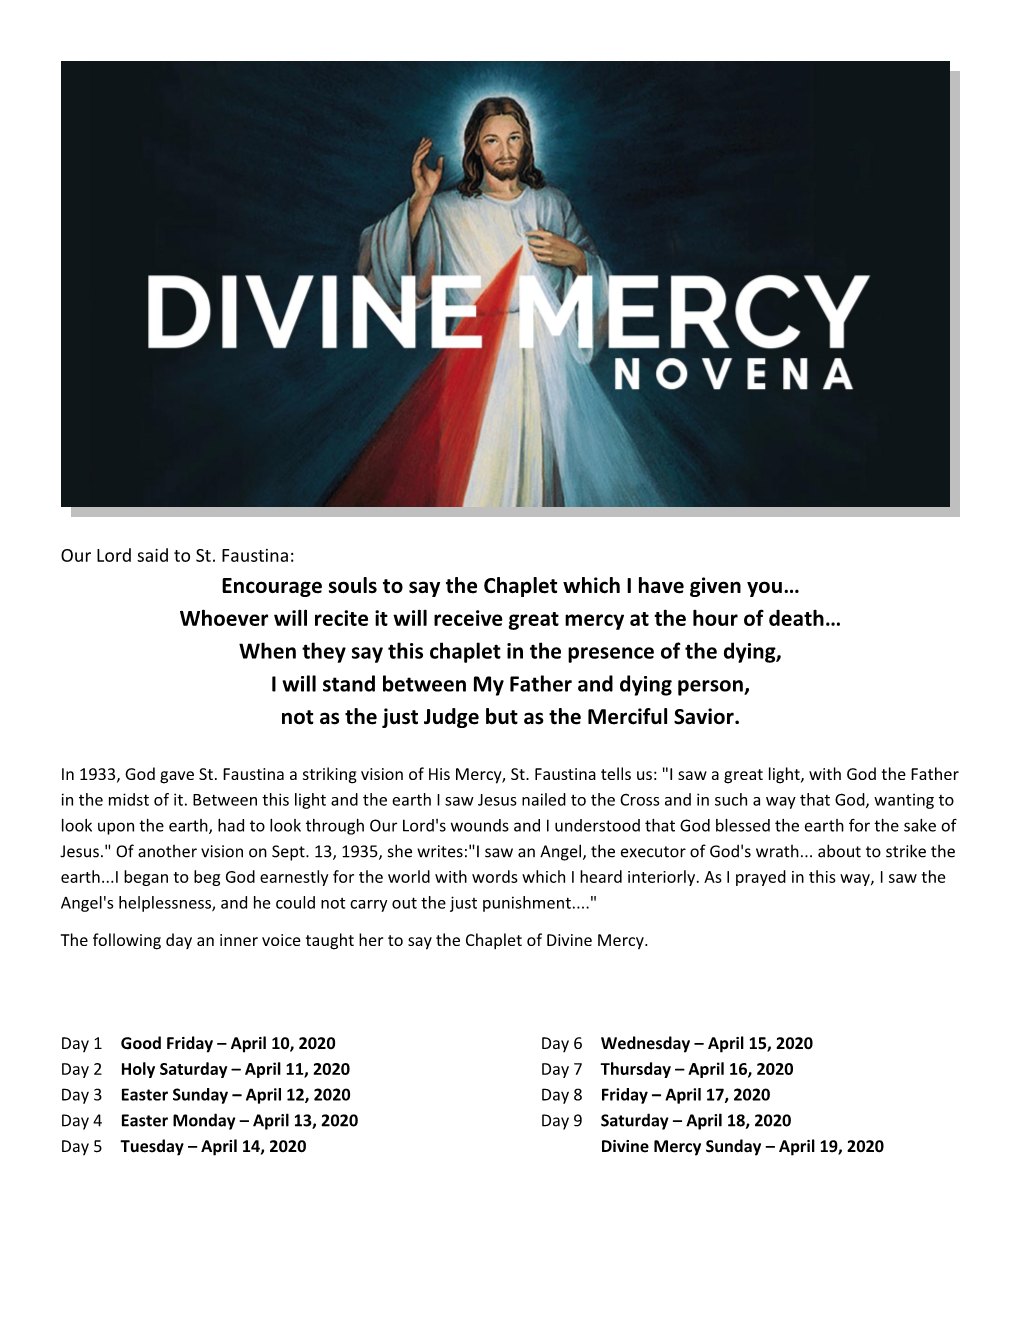 The Divine Mercy Novena